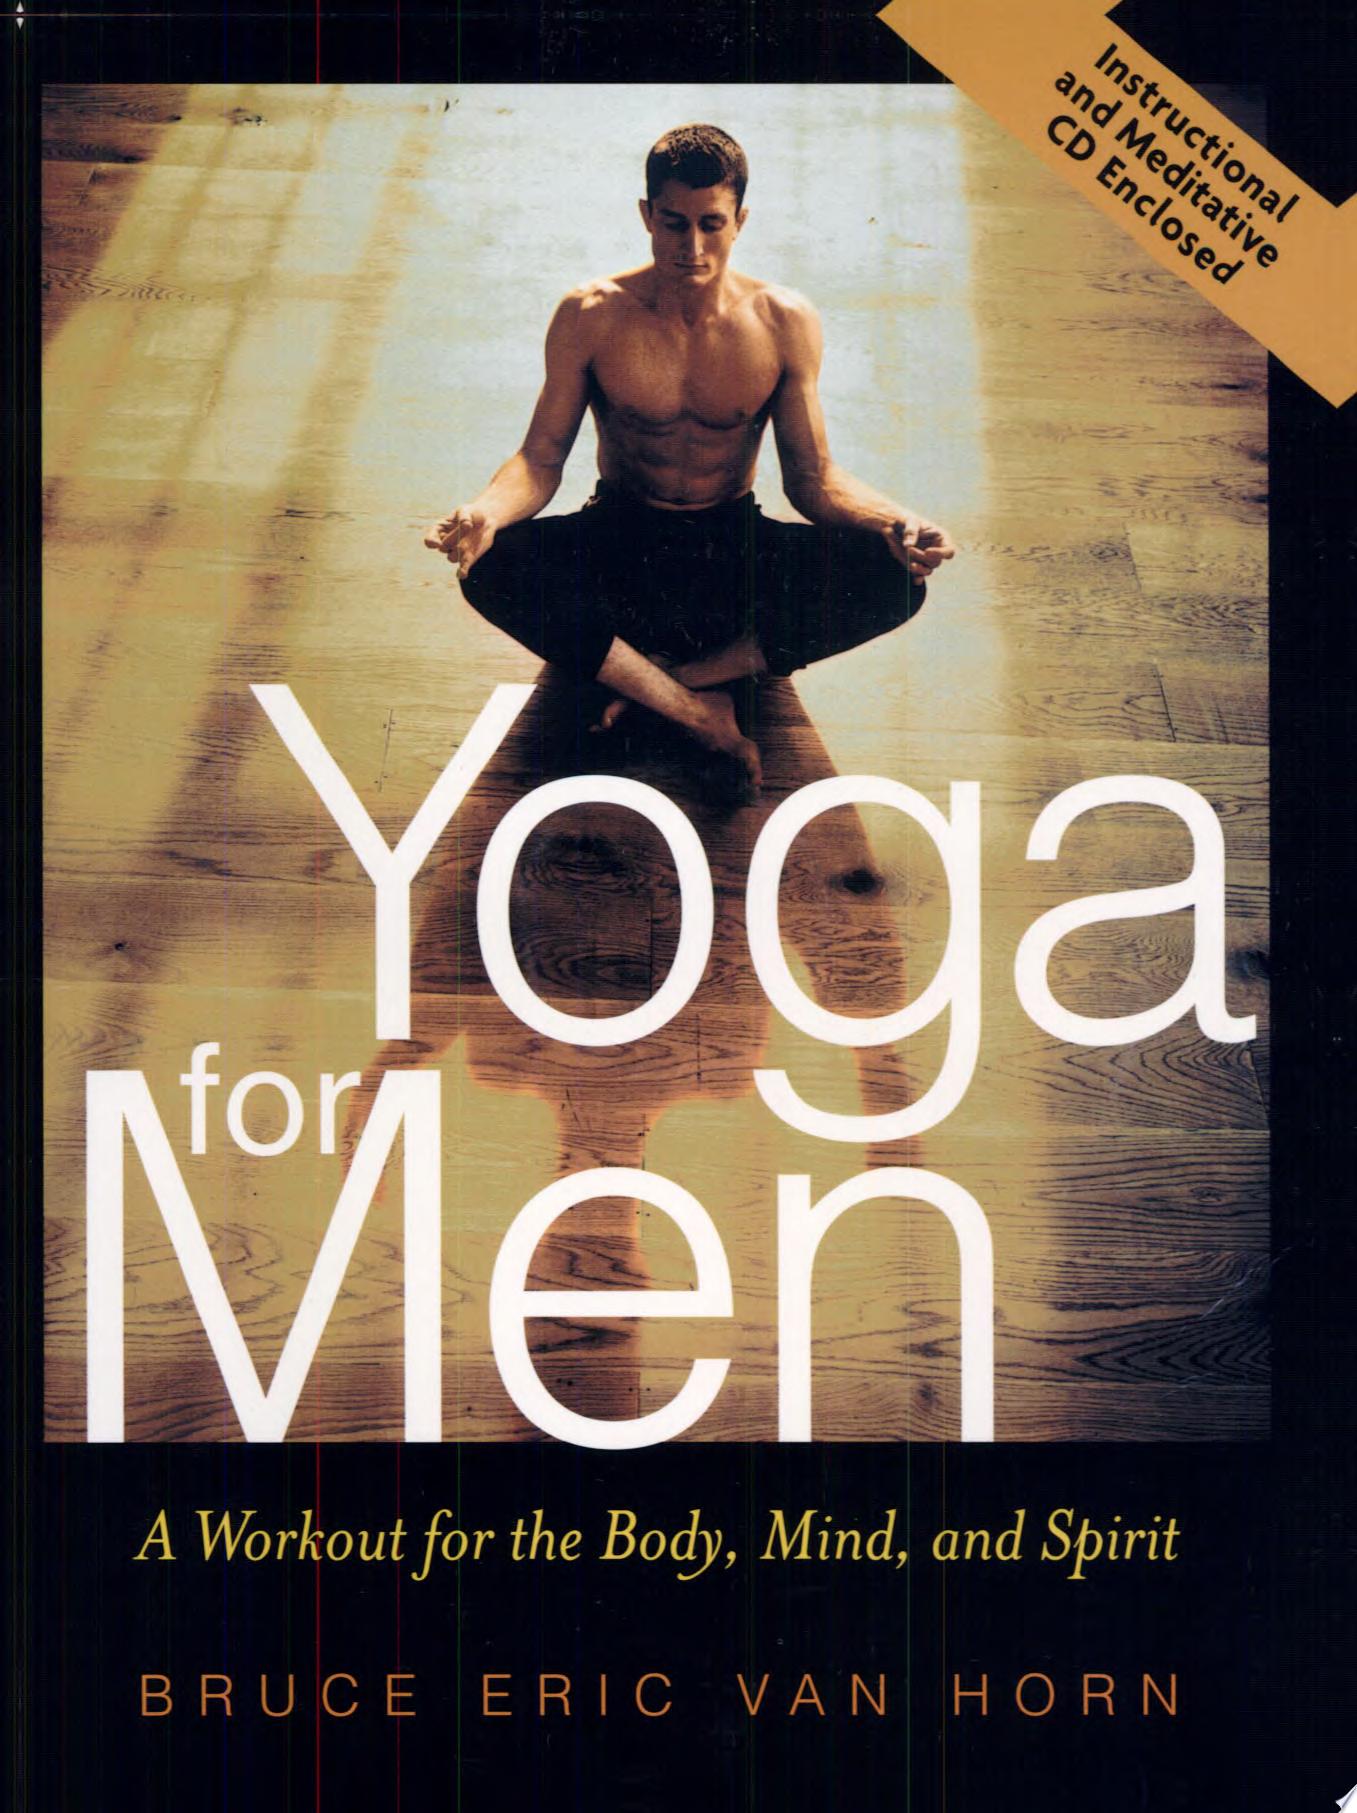 Image for "Yoga For Men"